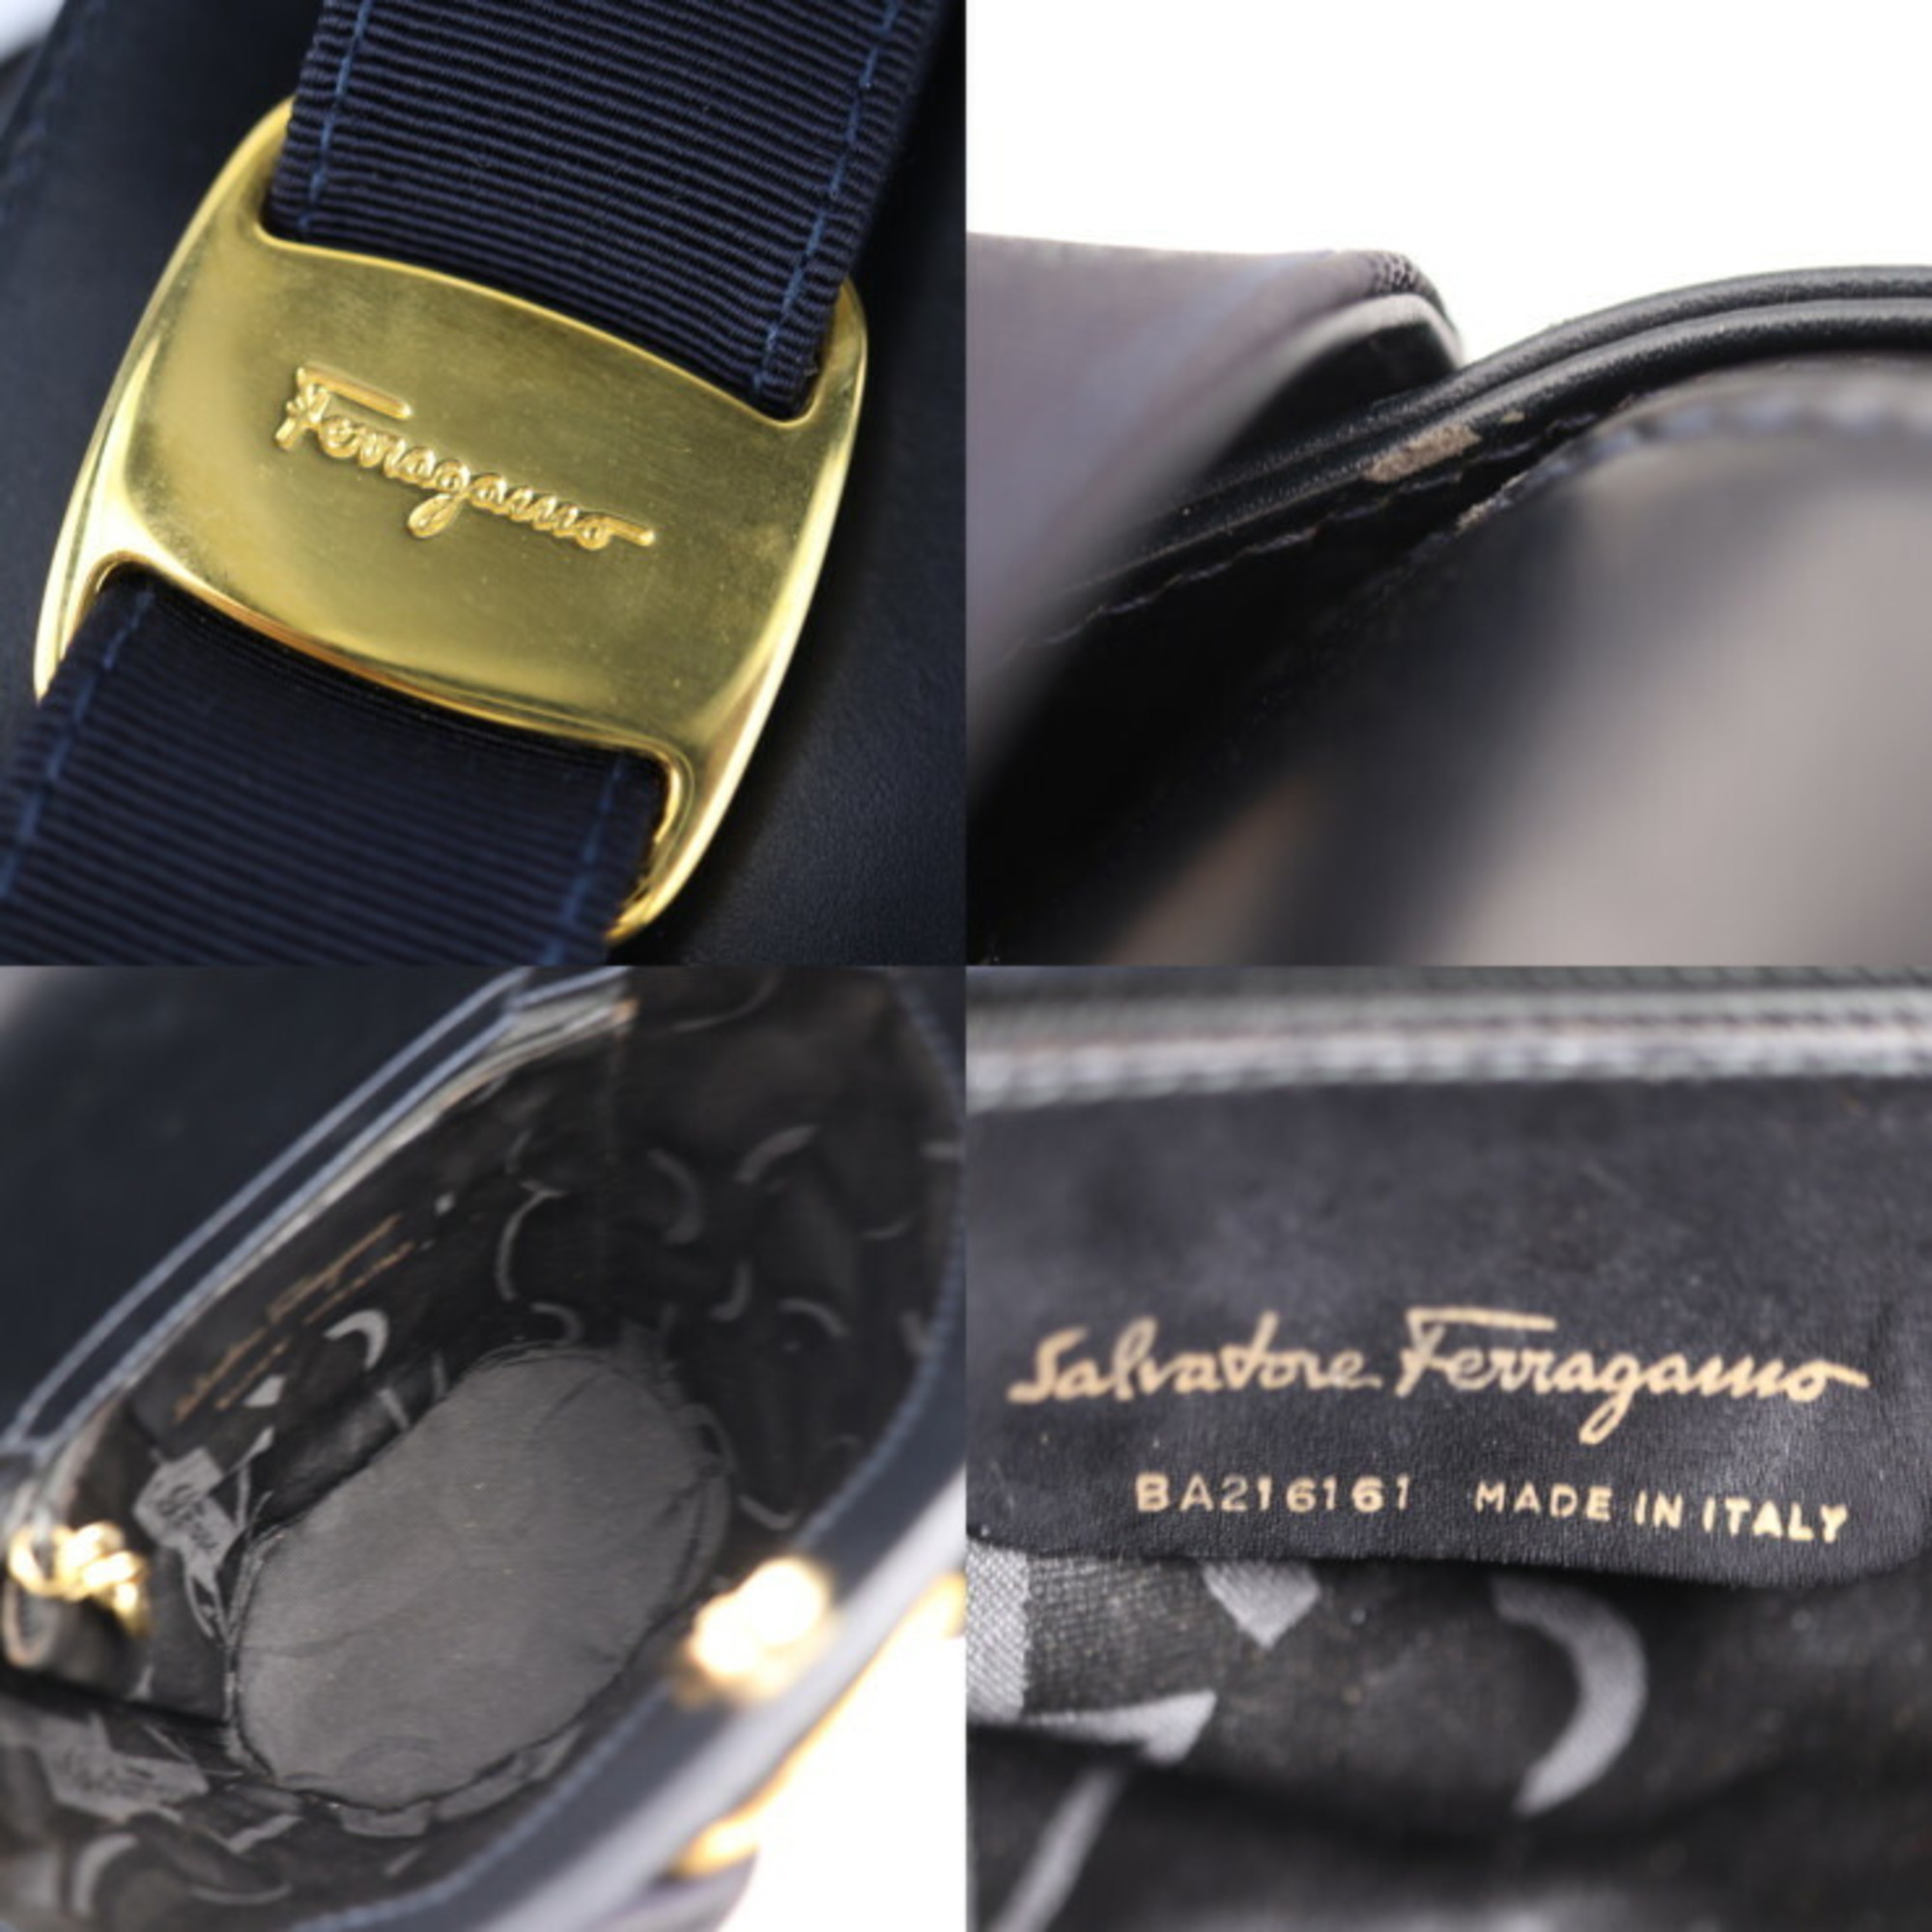 Salvatore Ferragamo Vara Handbag BA216161 Calf Leather Dark Navy Small Bucket Bag